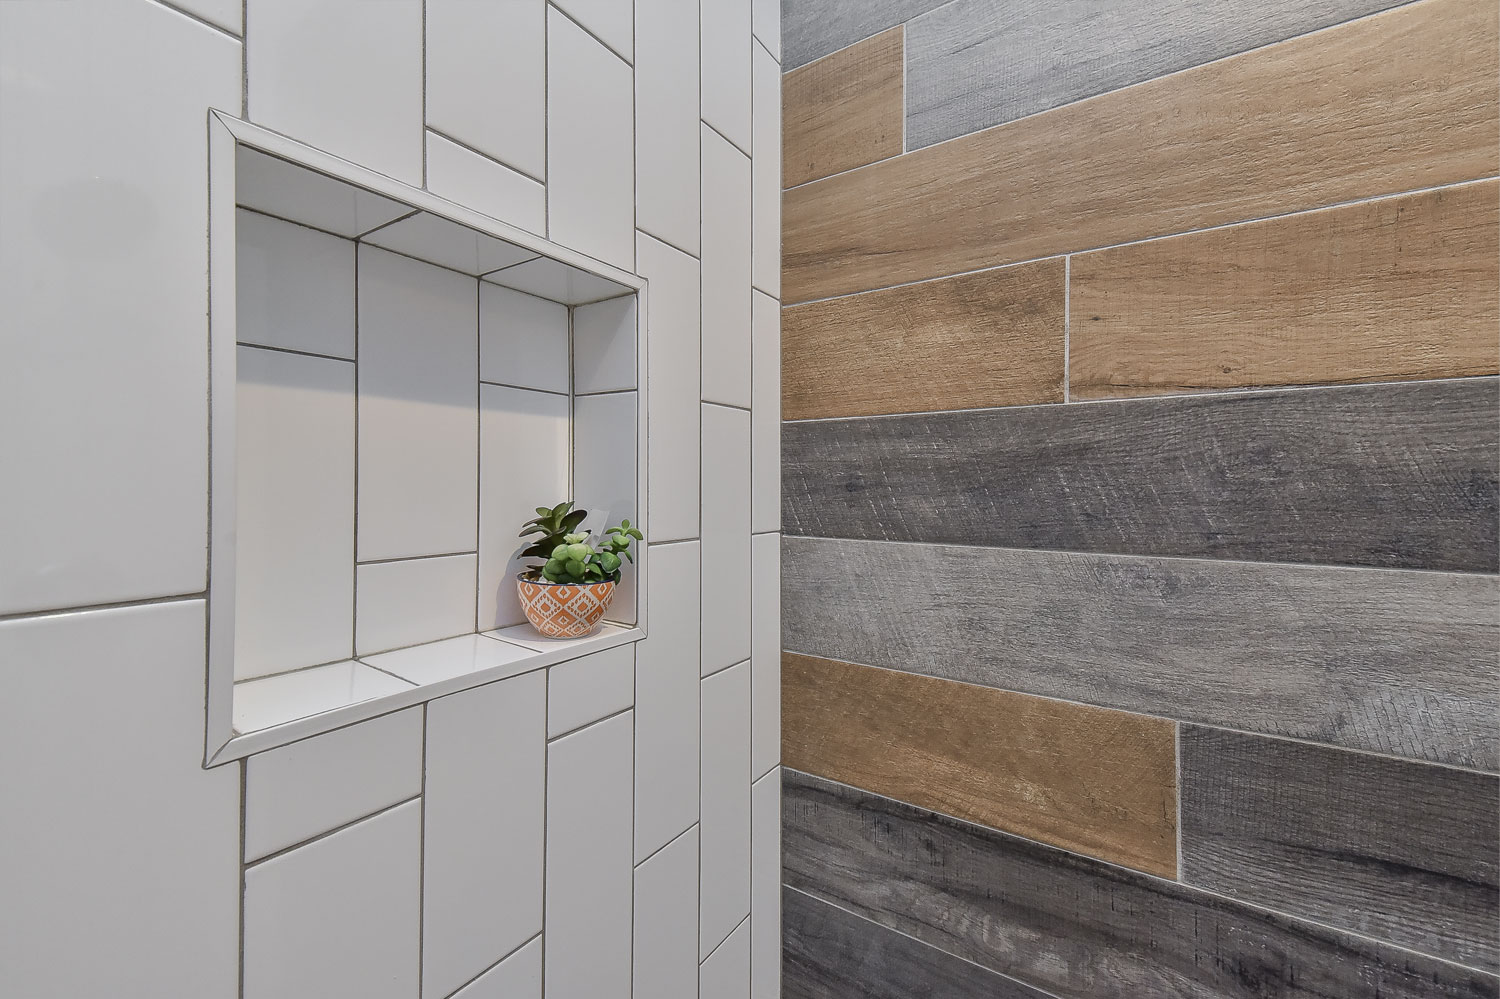 Glen Ellyn Basement Bathroom Wood Look Tile - Sebring Design Build